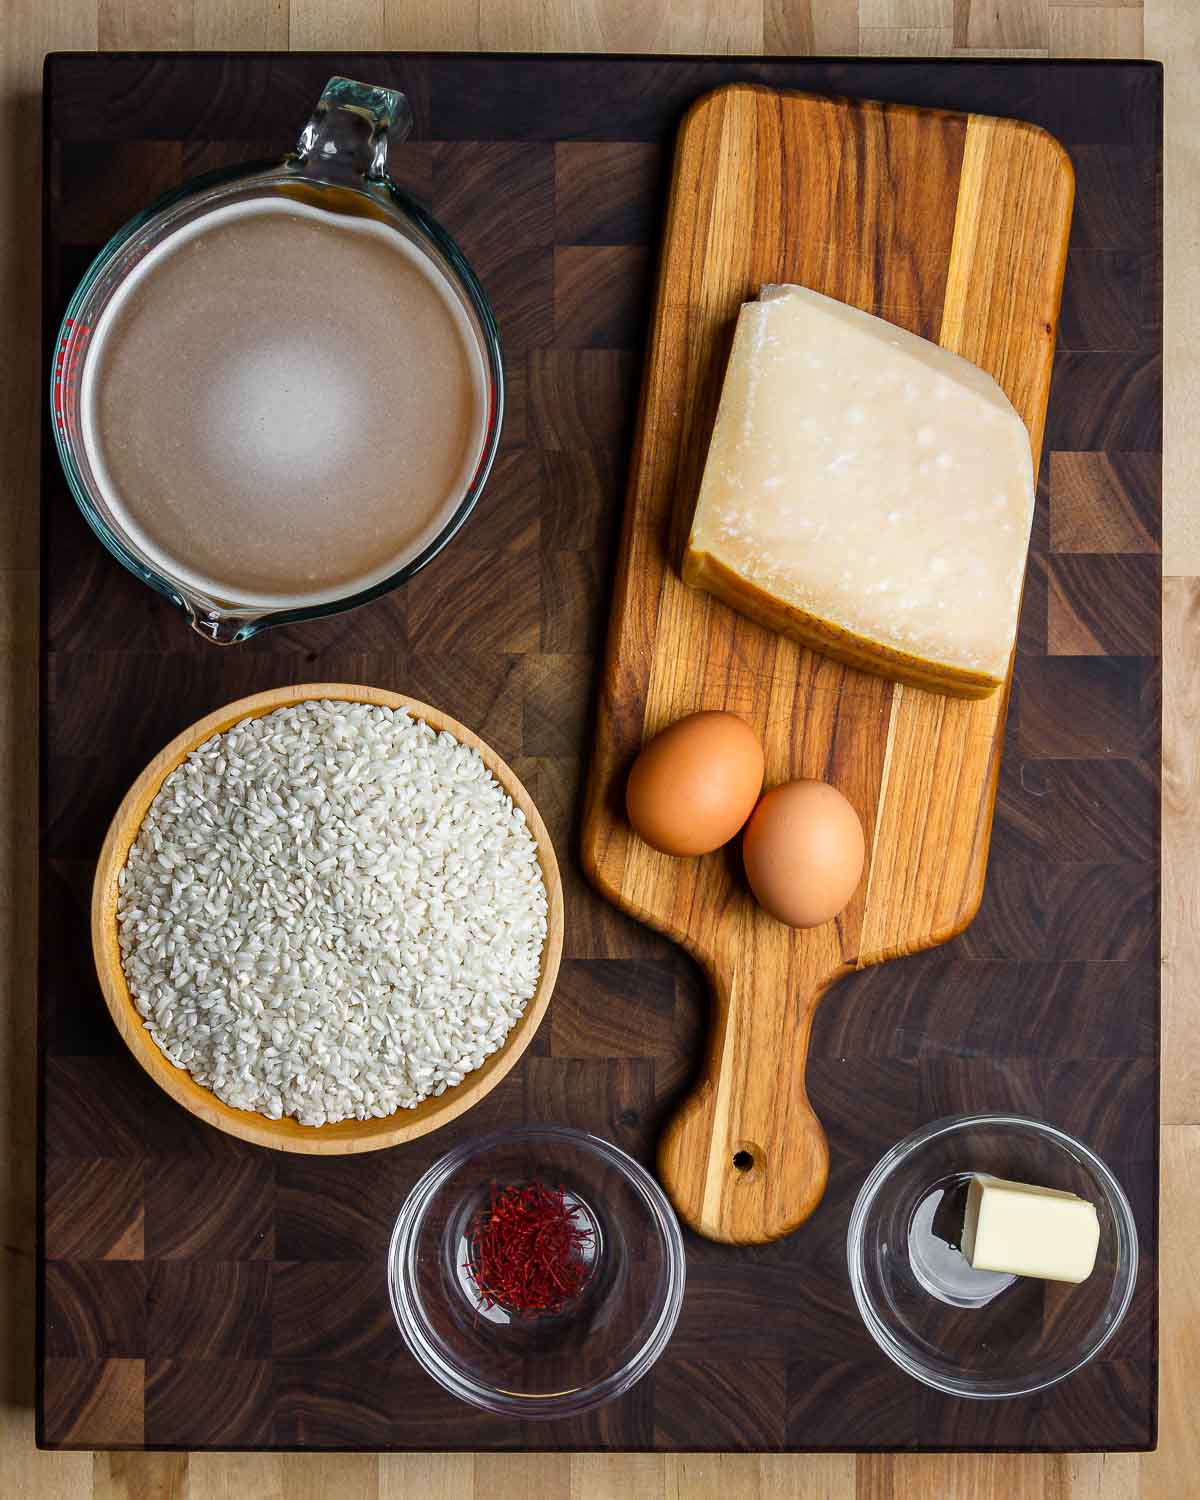 Ingredients shown: beef stock, Parmigiano Reggiano, eggs, arborio rice, saffron, and butter.